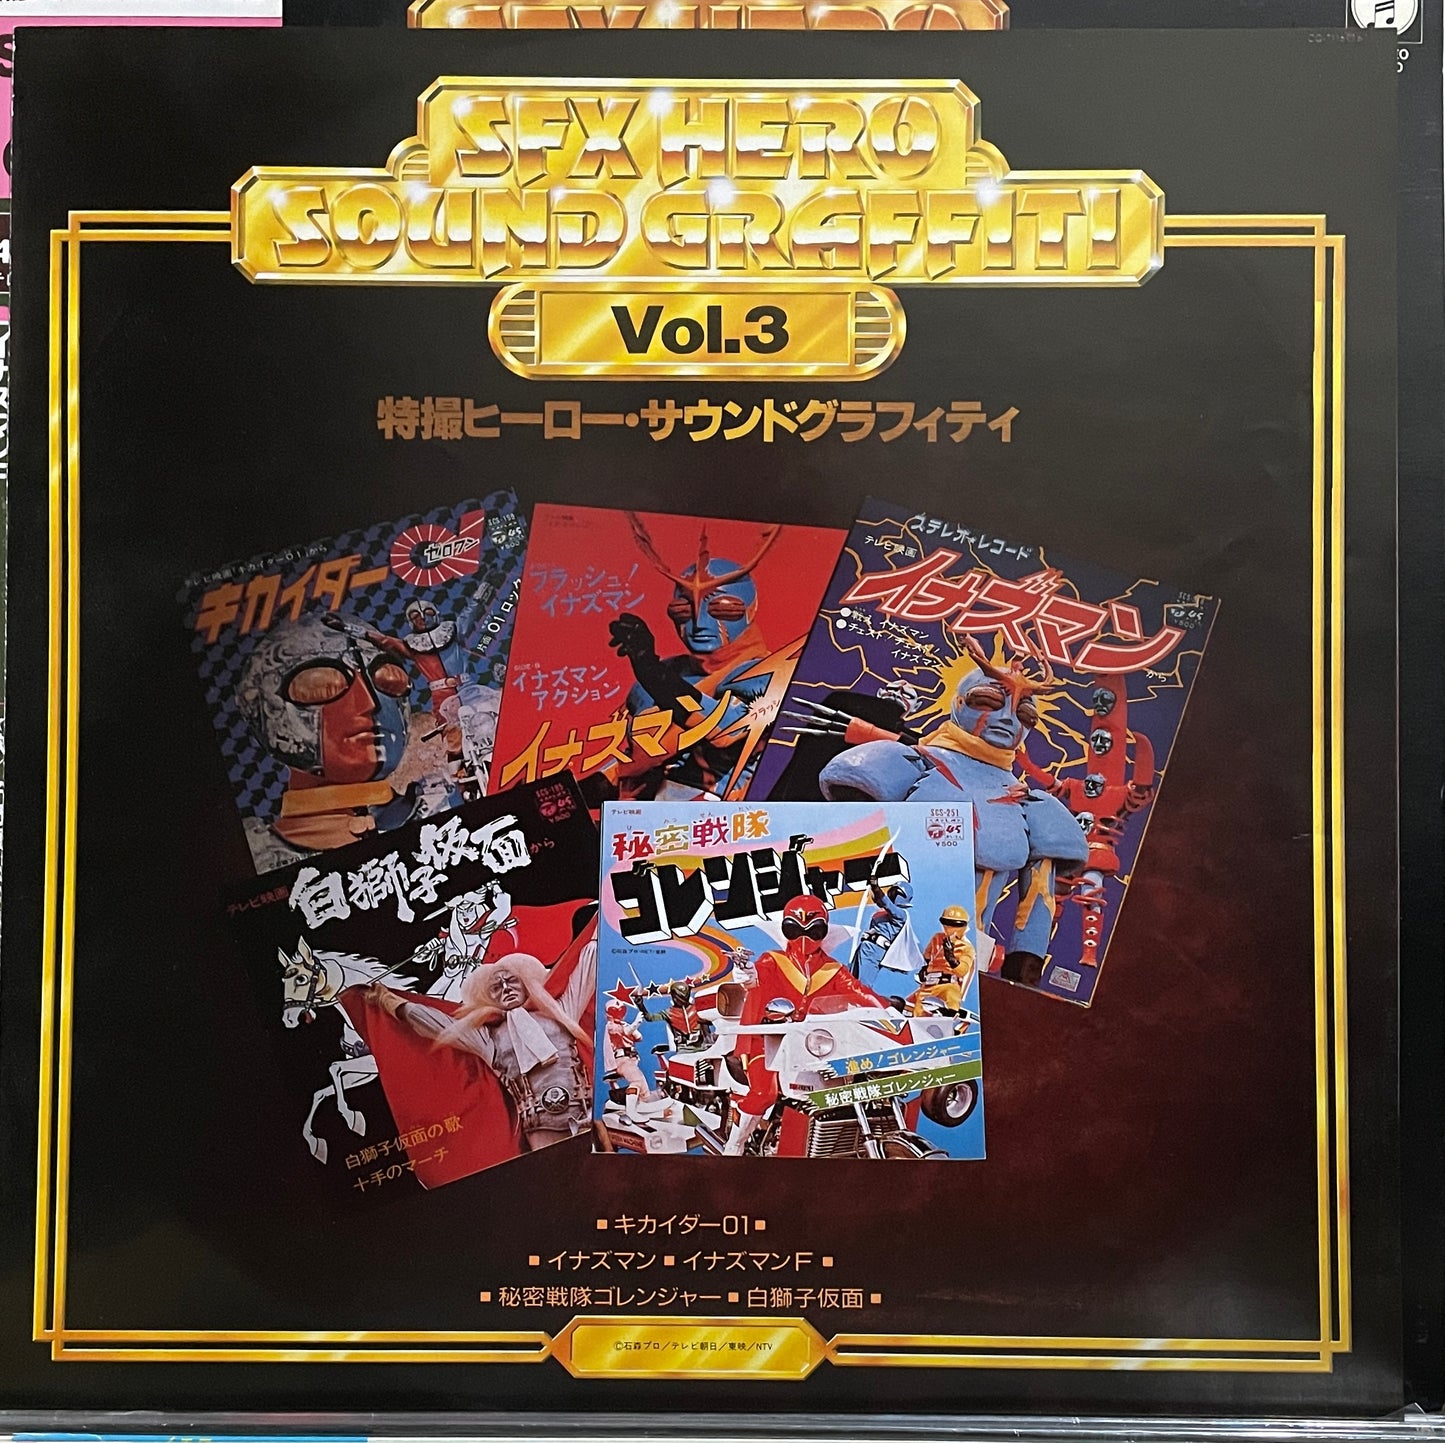 SFX Hero Sound Graffiti Vol. 3 (1986)